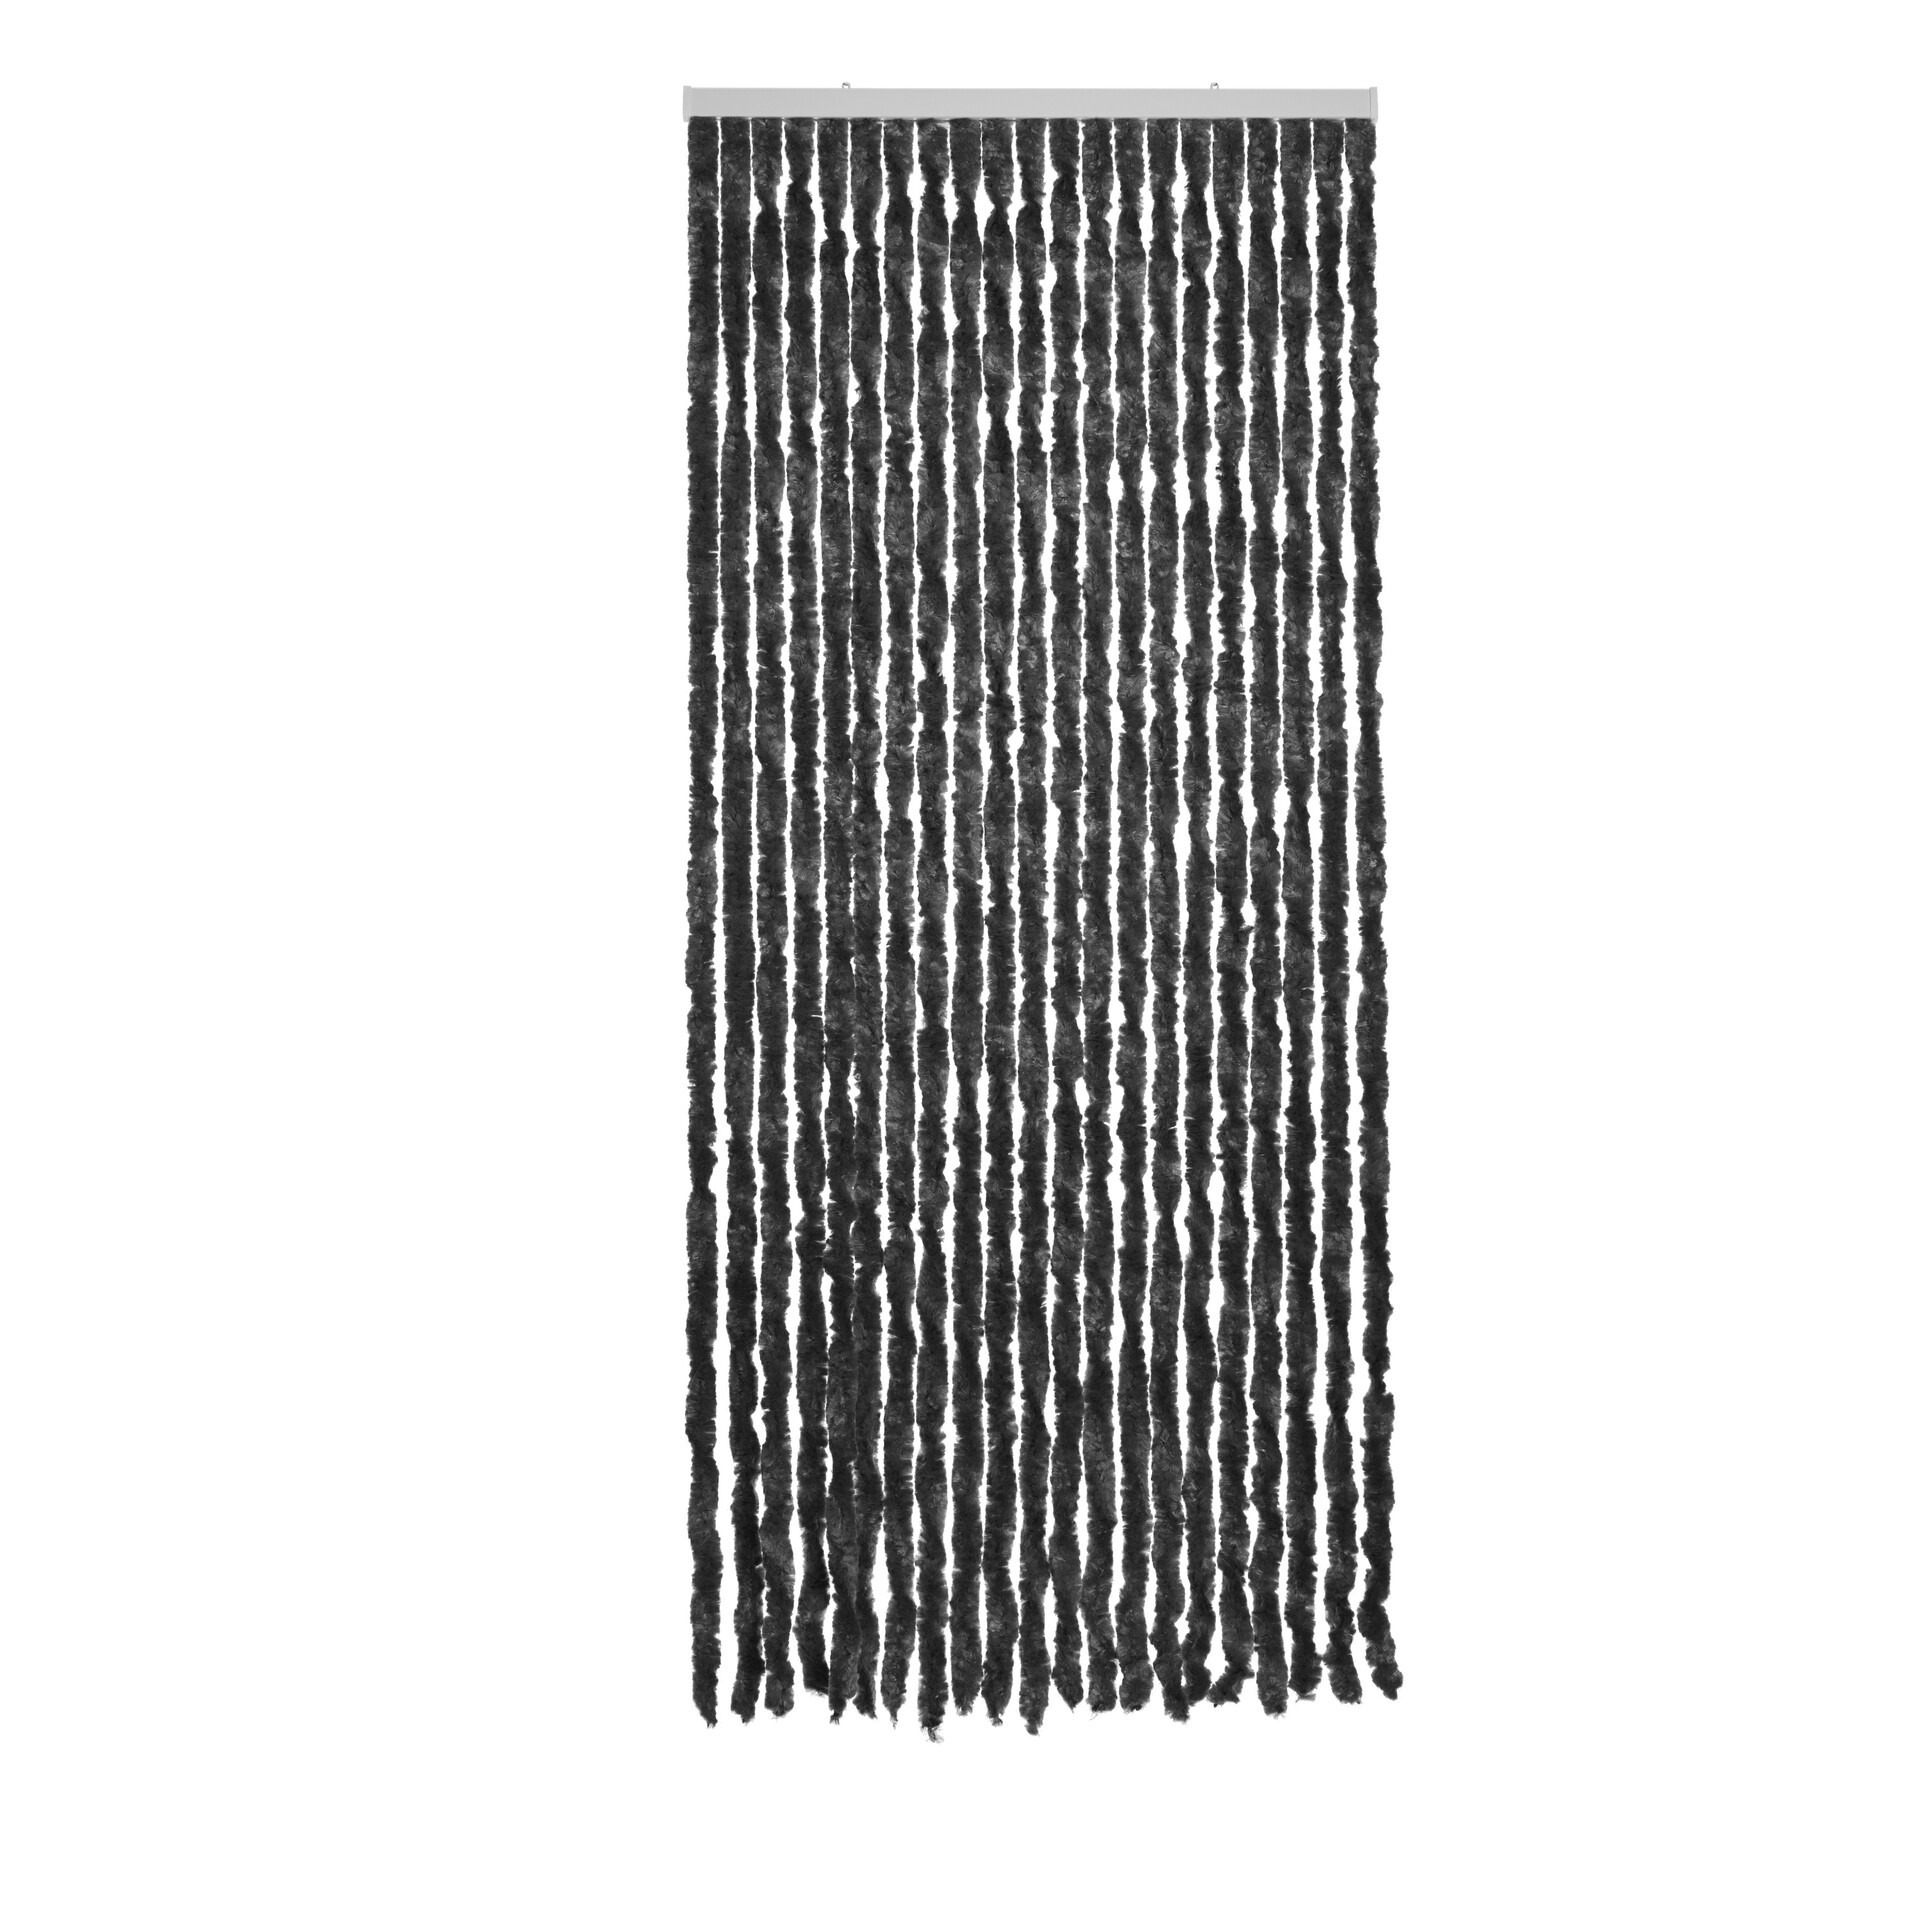 Ambiance Zwart polyester stroken vliegen/insecten gordijn 93 x 210 cm -